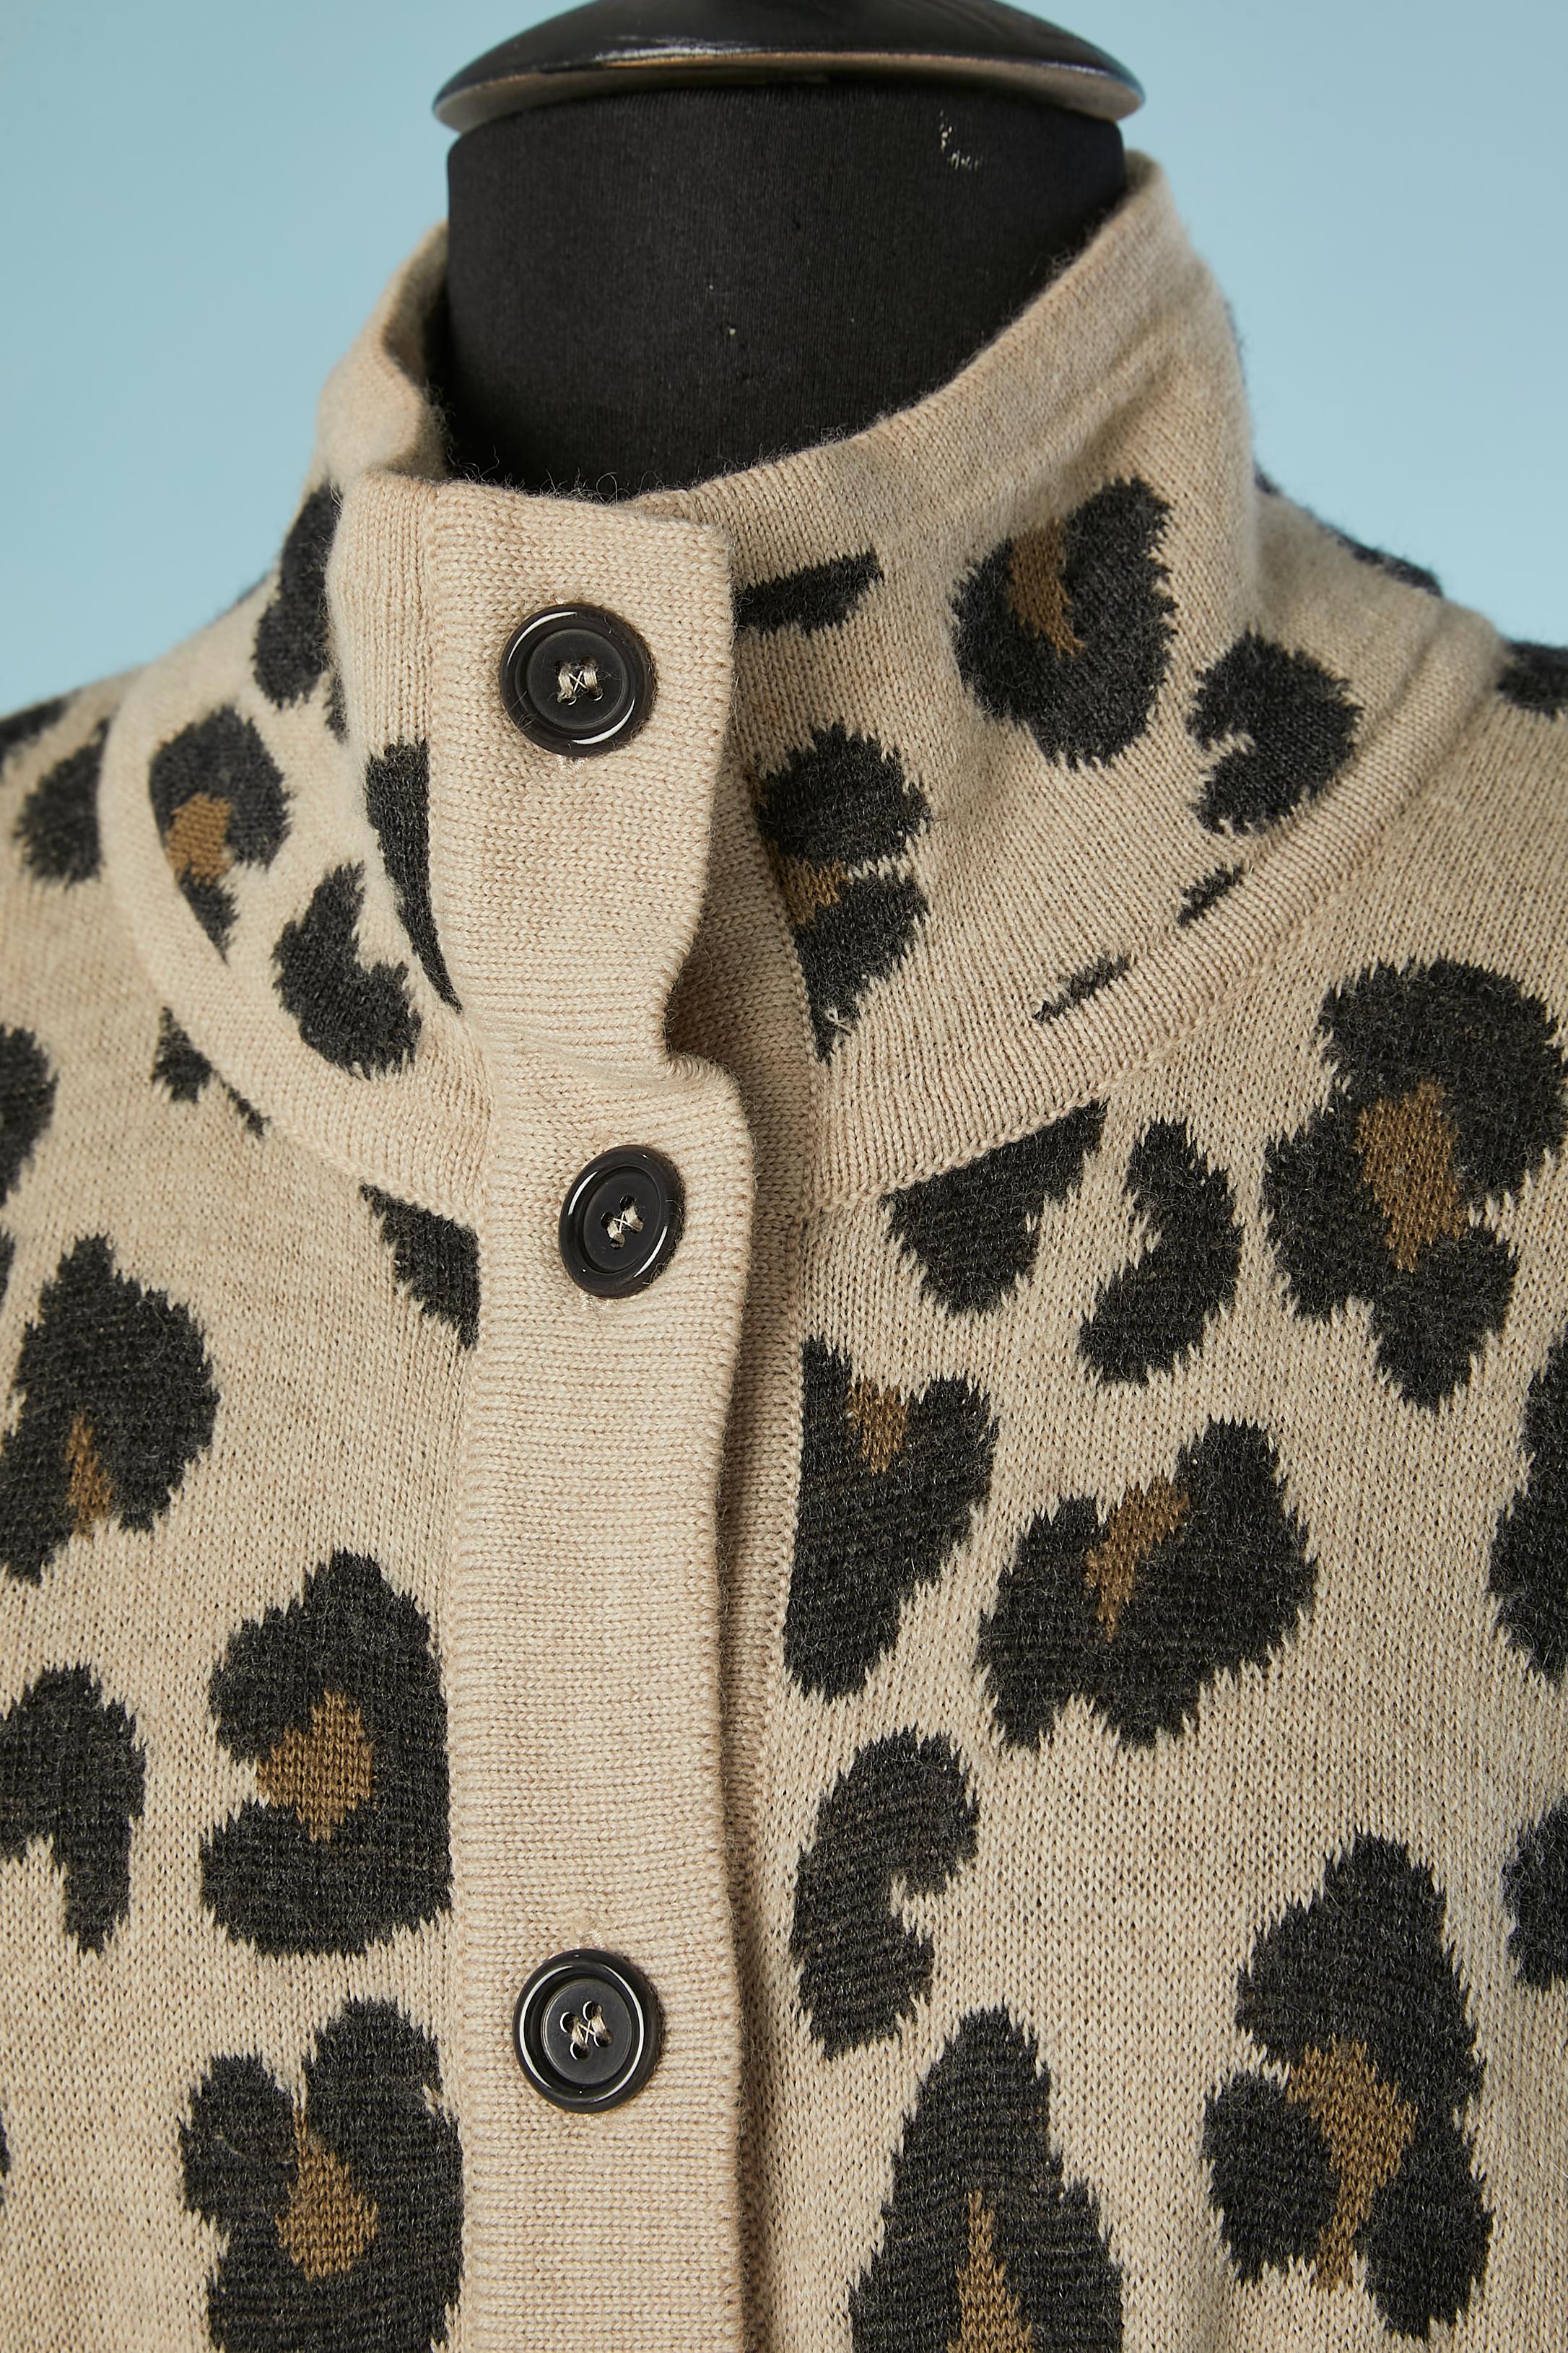 Wool knit cardigan with leopard pattern jacquard. Pockets on both side. 
SIZE 40 / L 